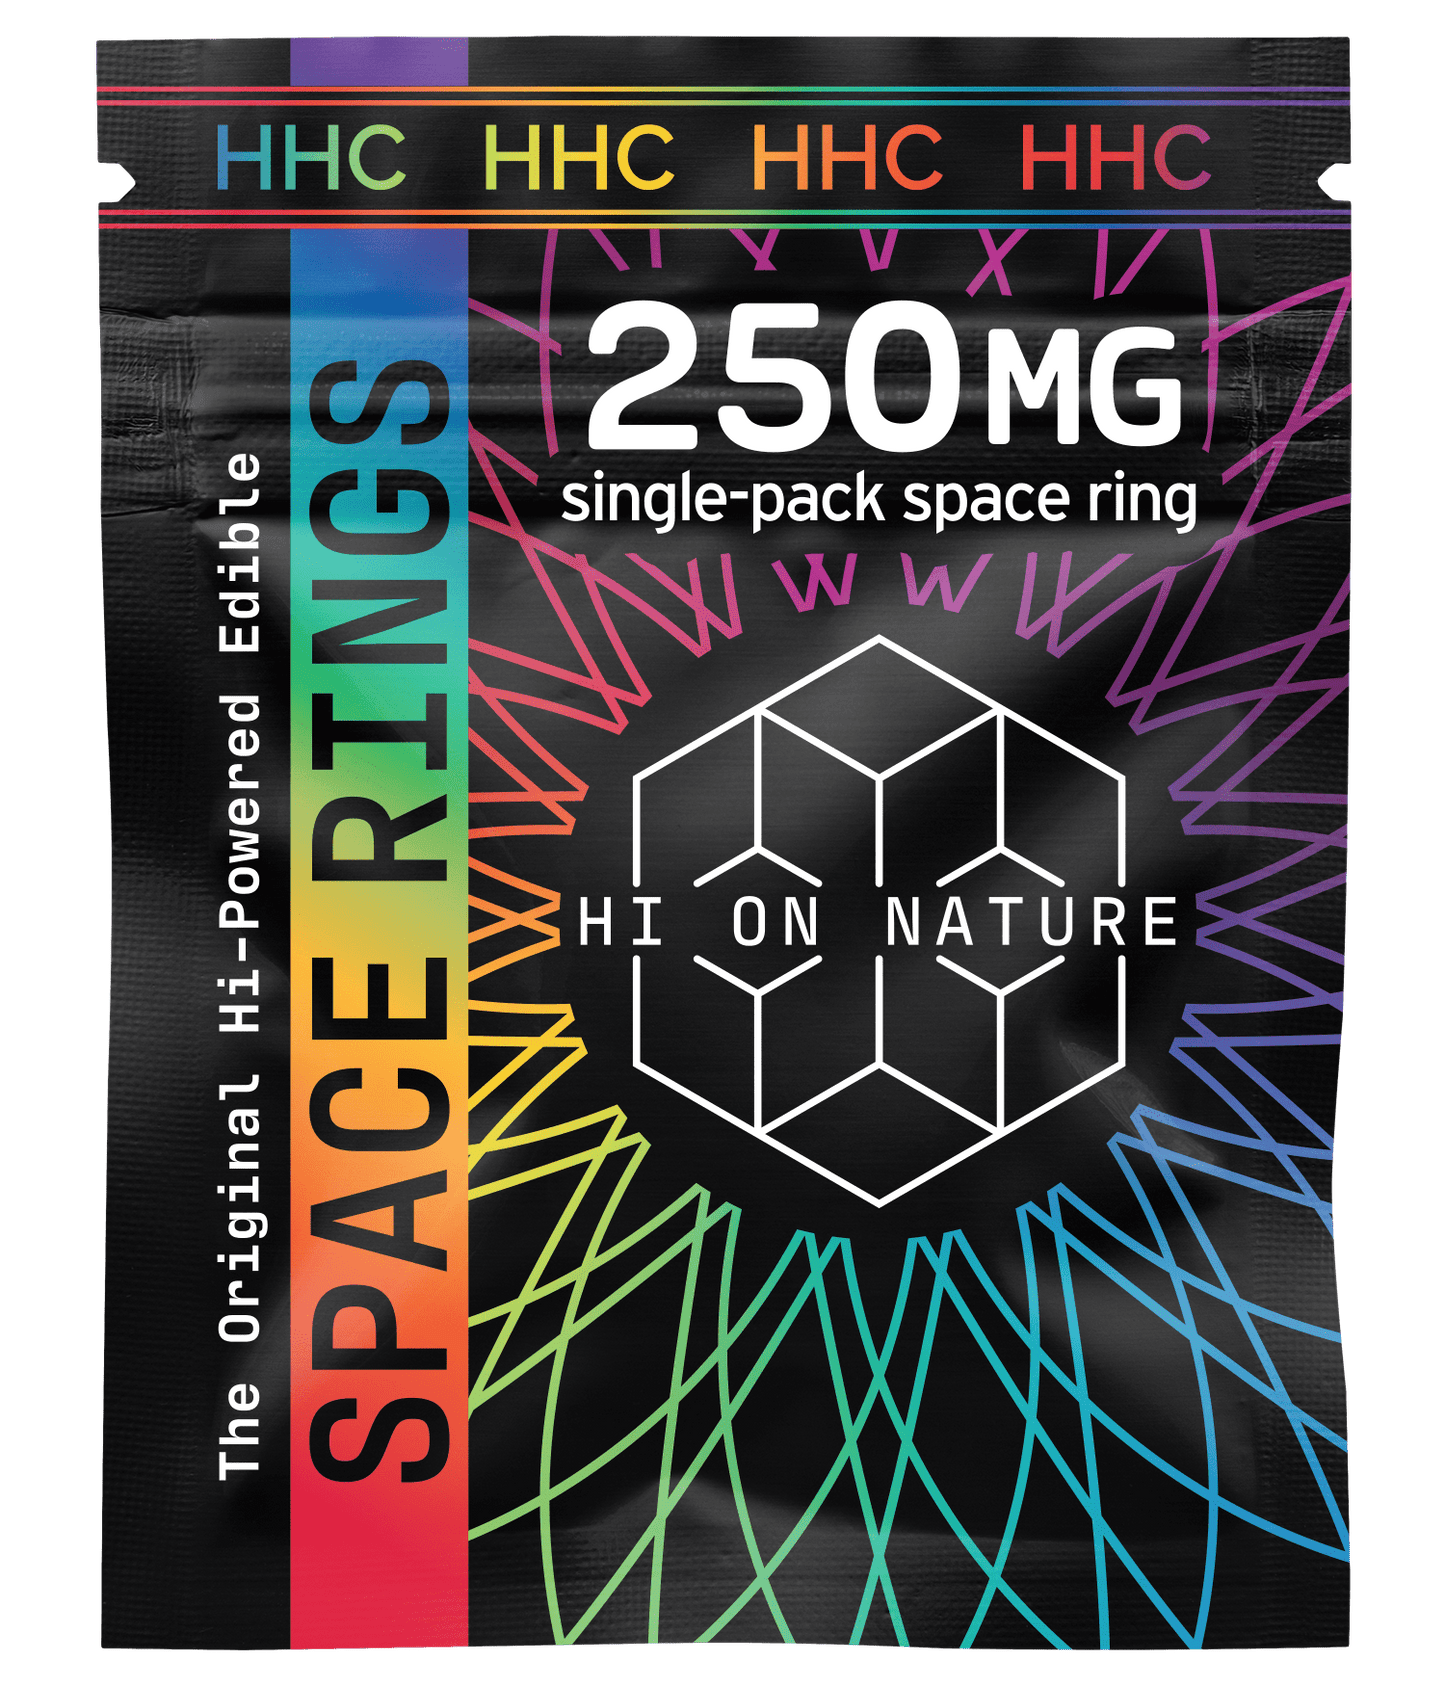 HoN 250mg HHC SPACE RINGS - 50 PACK JAR Hi on Nature Delta 8 gummies Legal Hemp For Sale